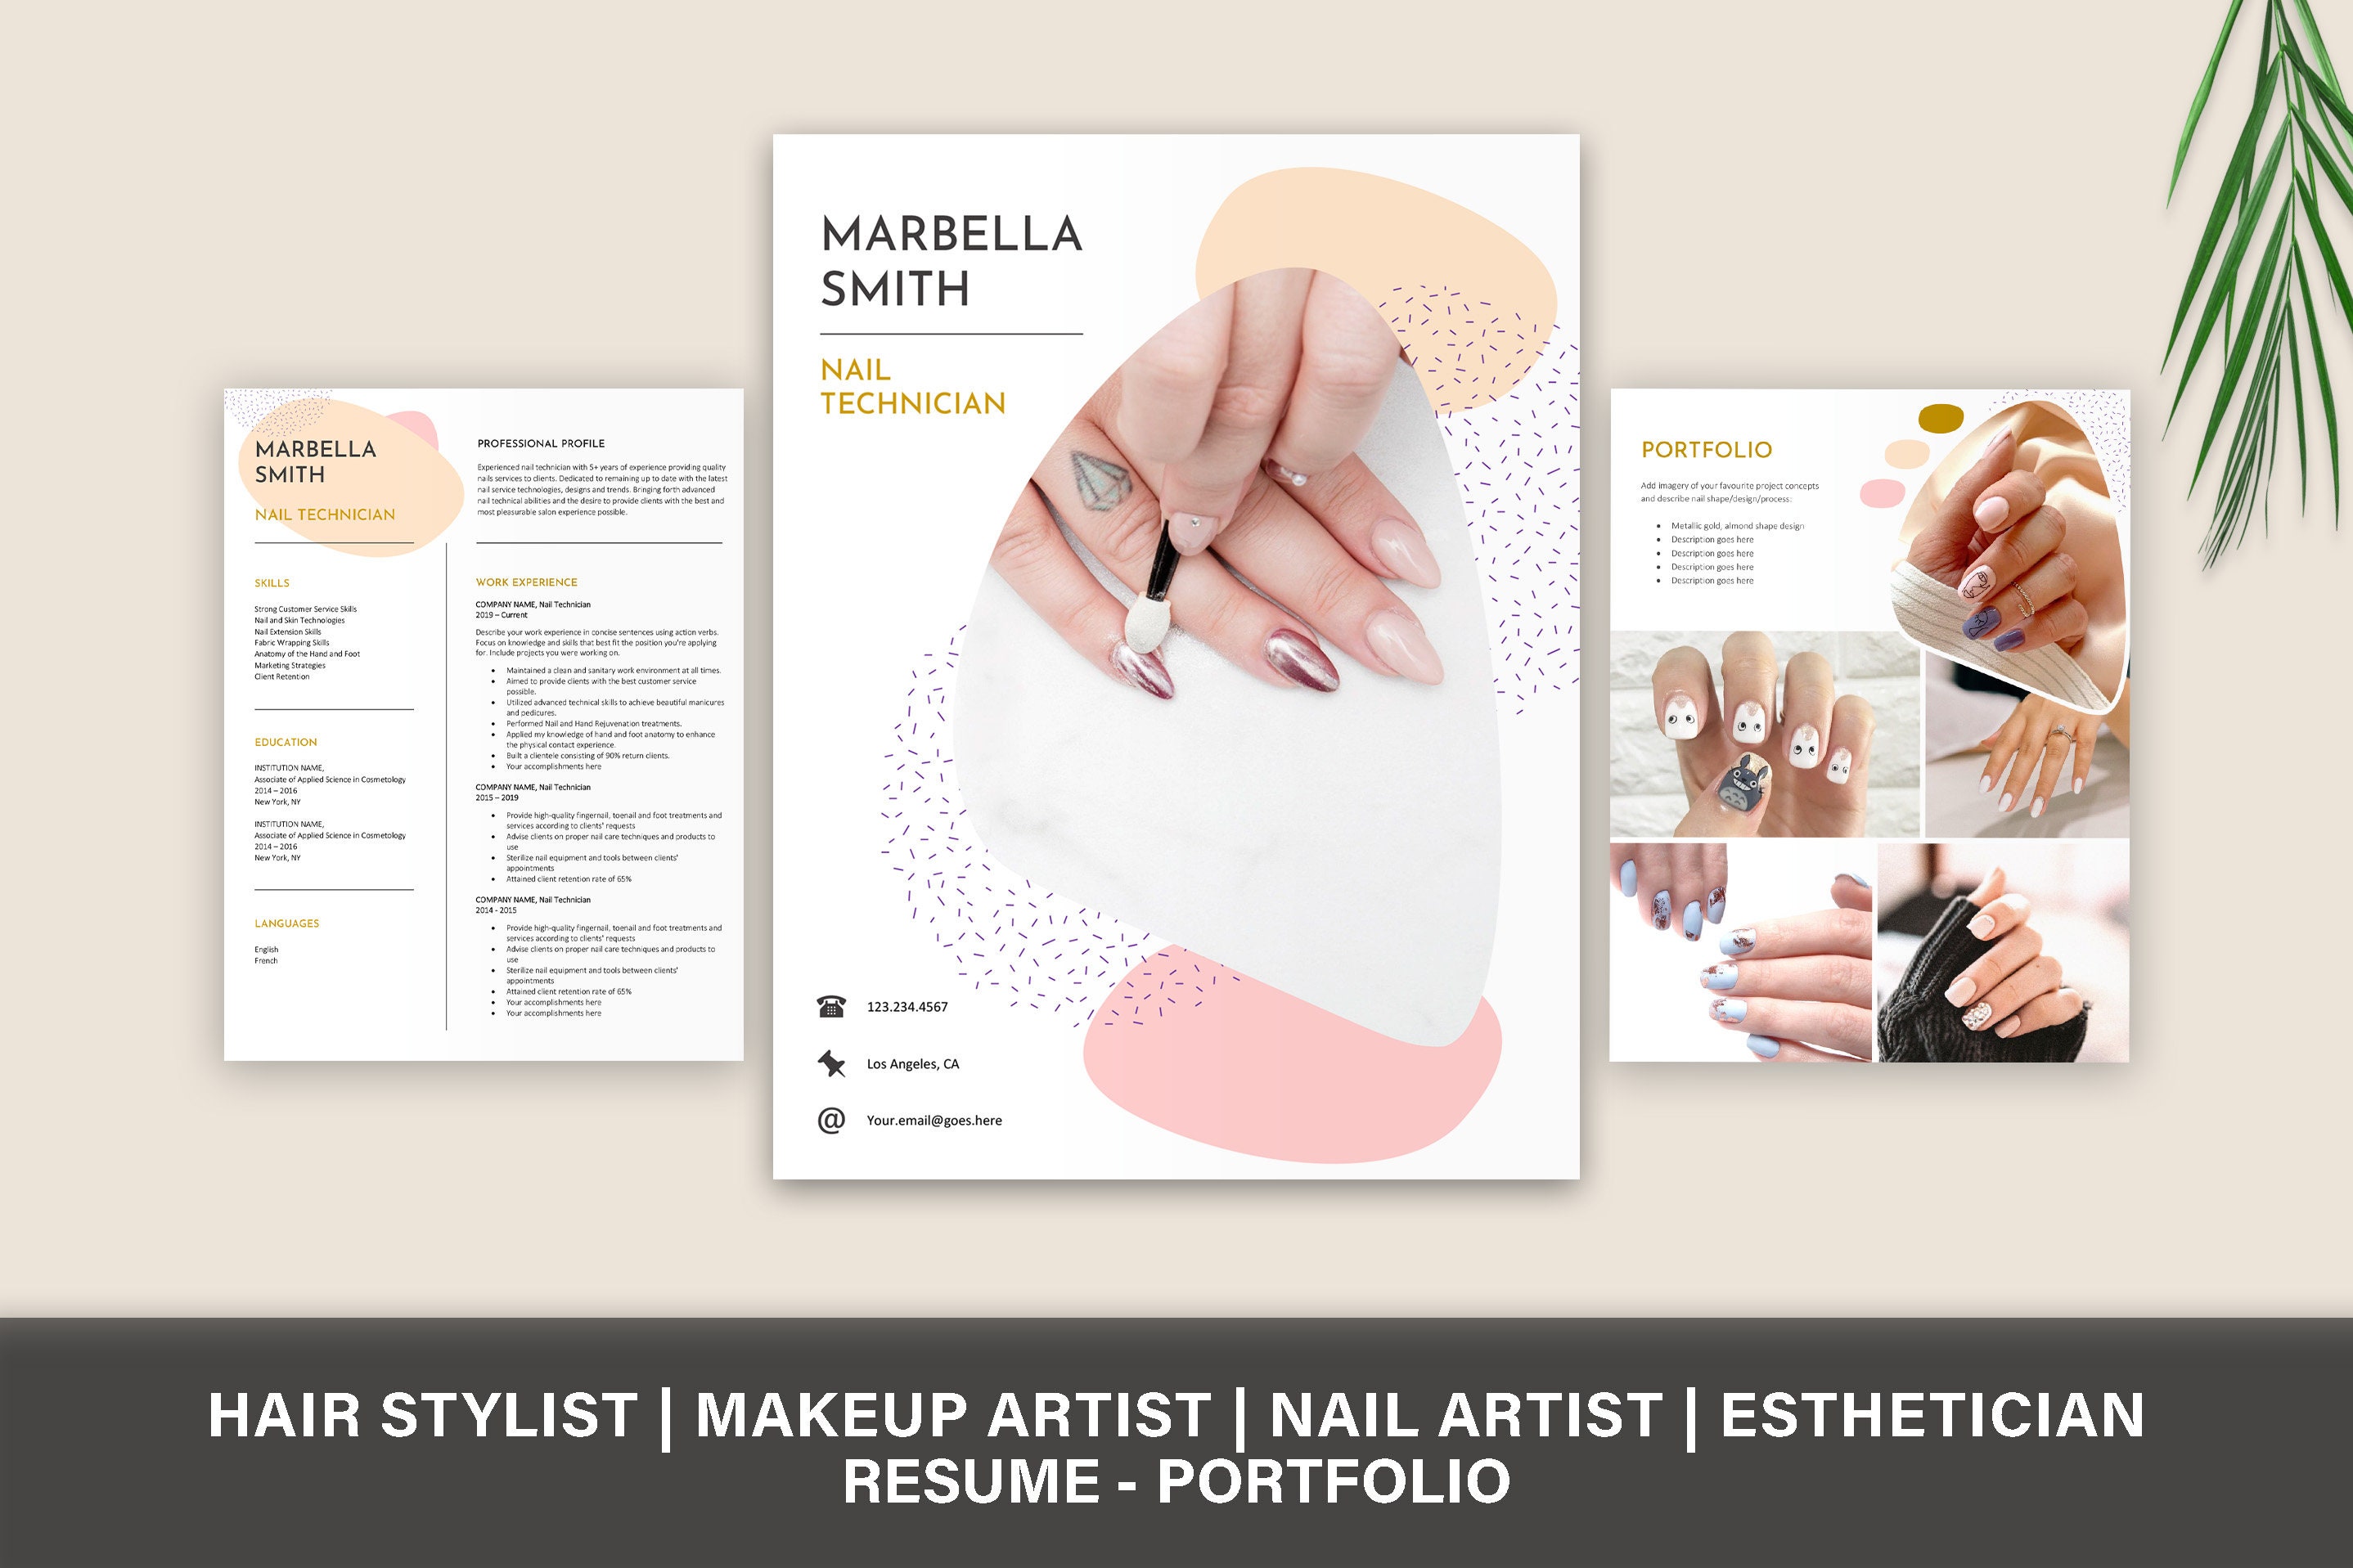 6. Nail Art Designer Job Description Sample - wide 2